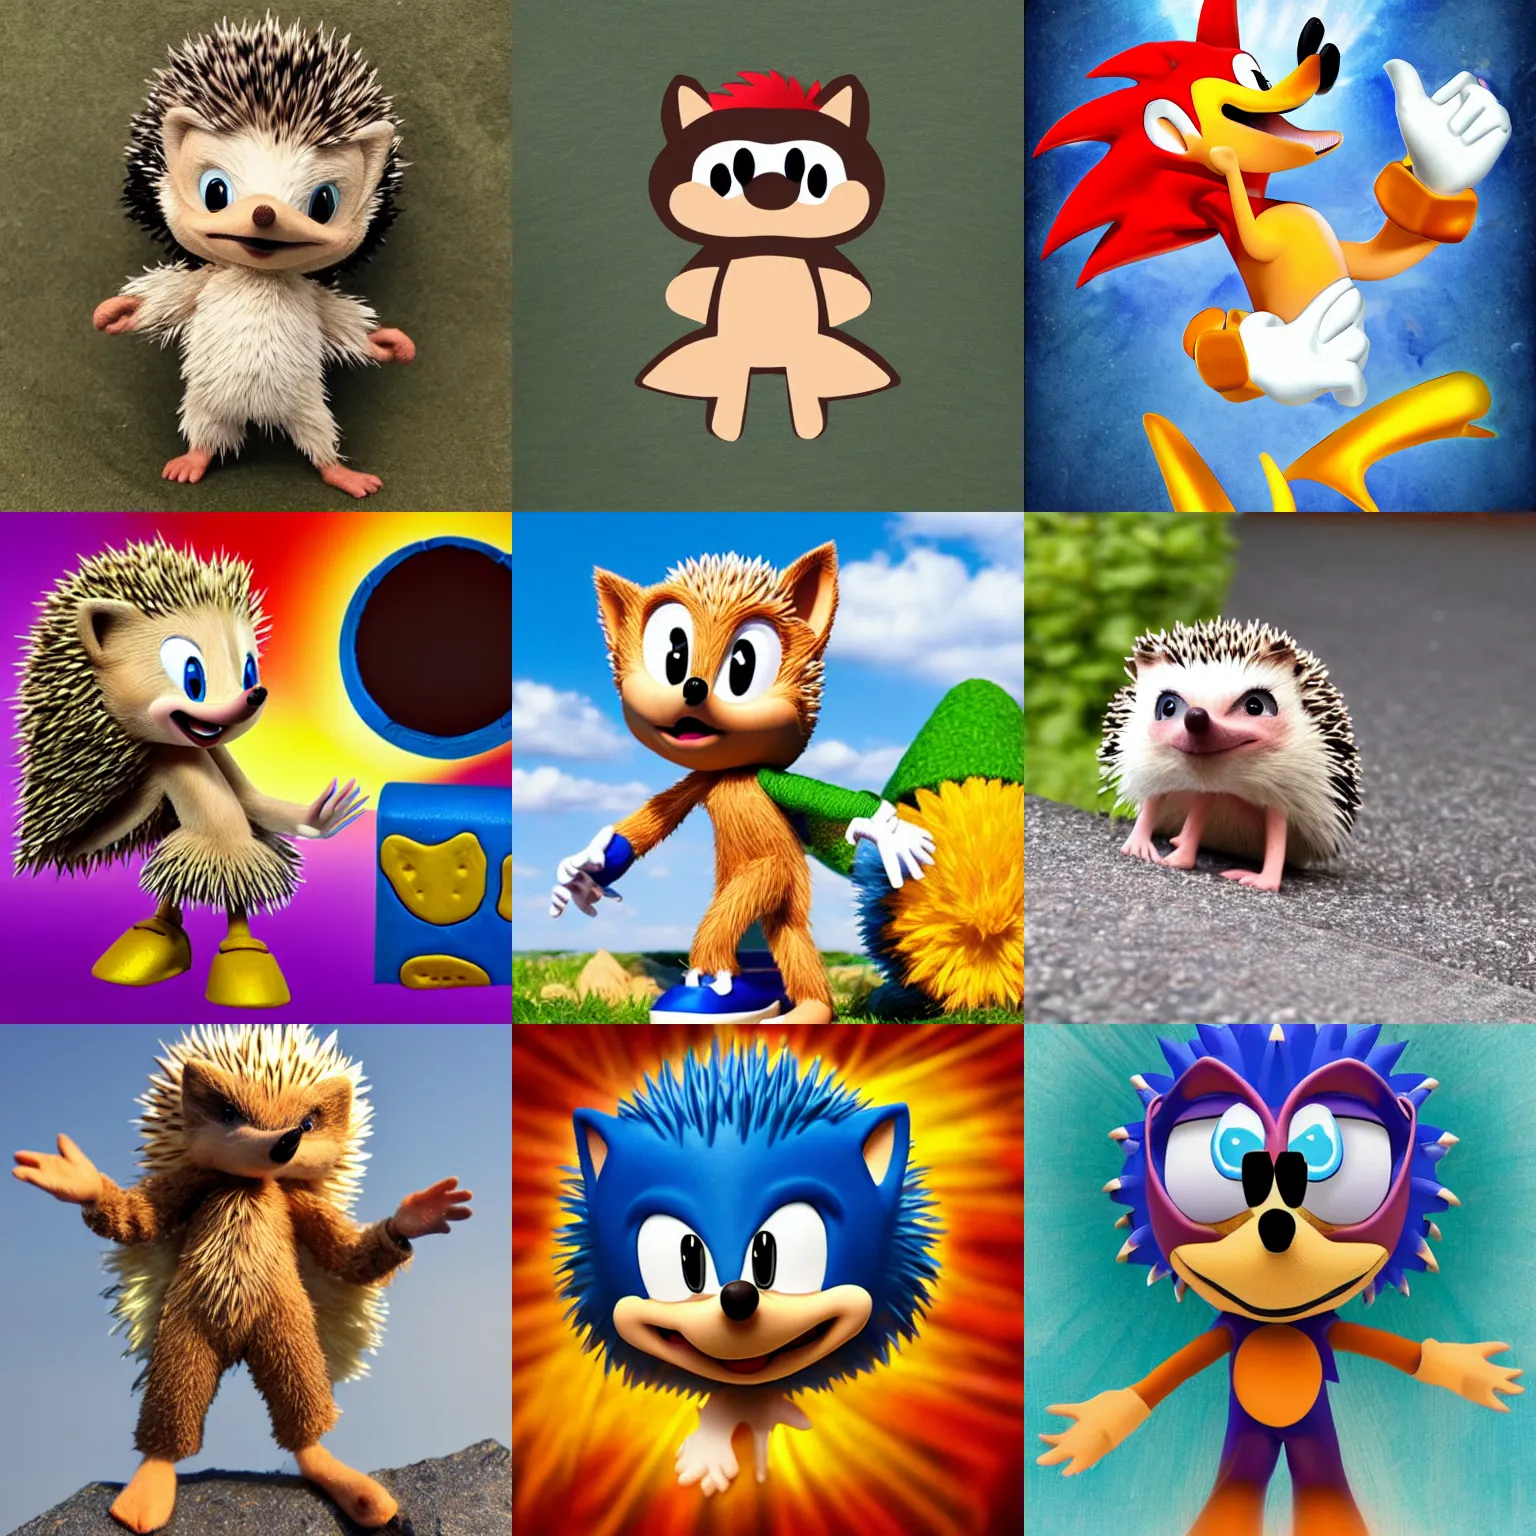 Prompt: sunik the hedgehog